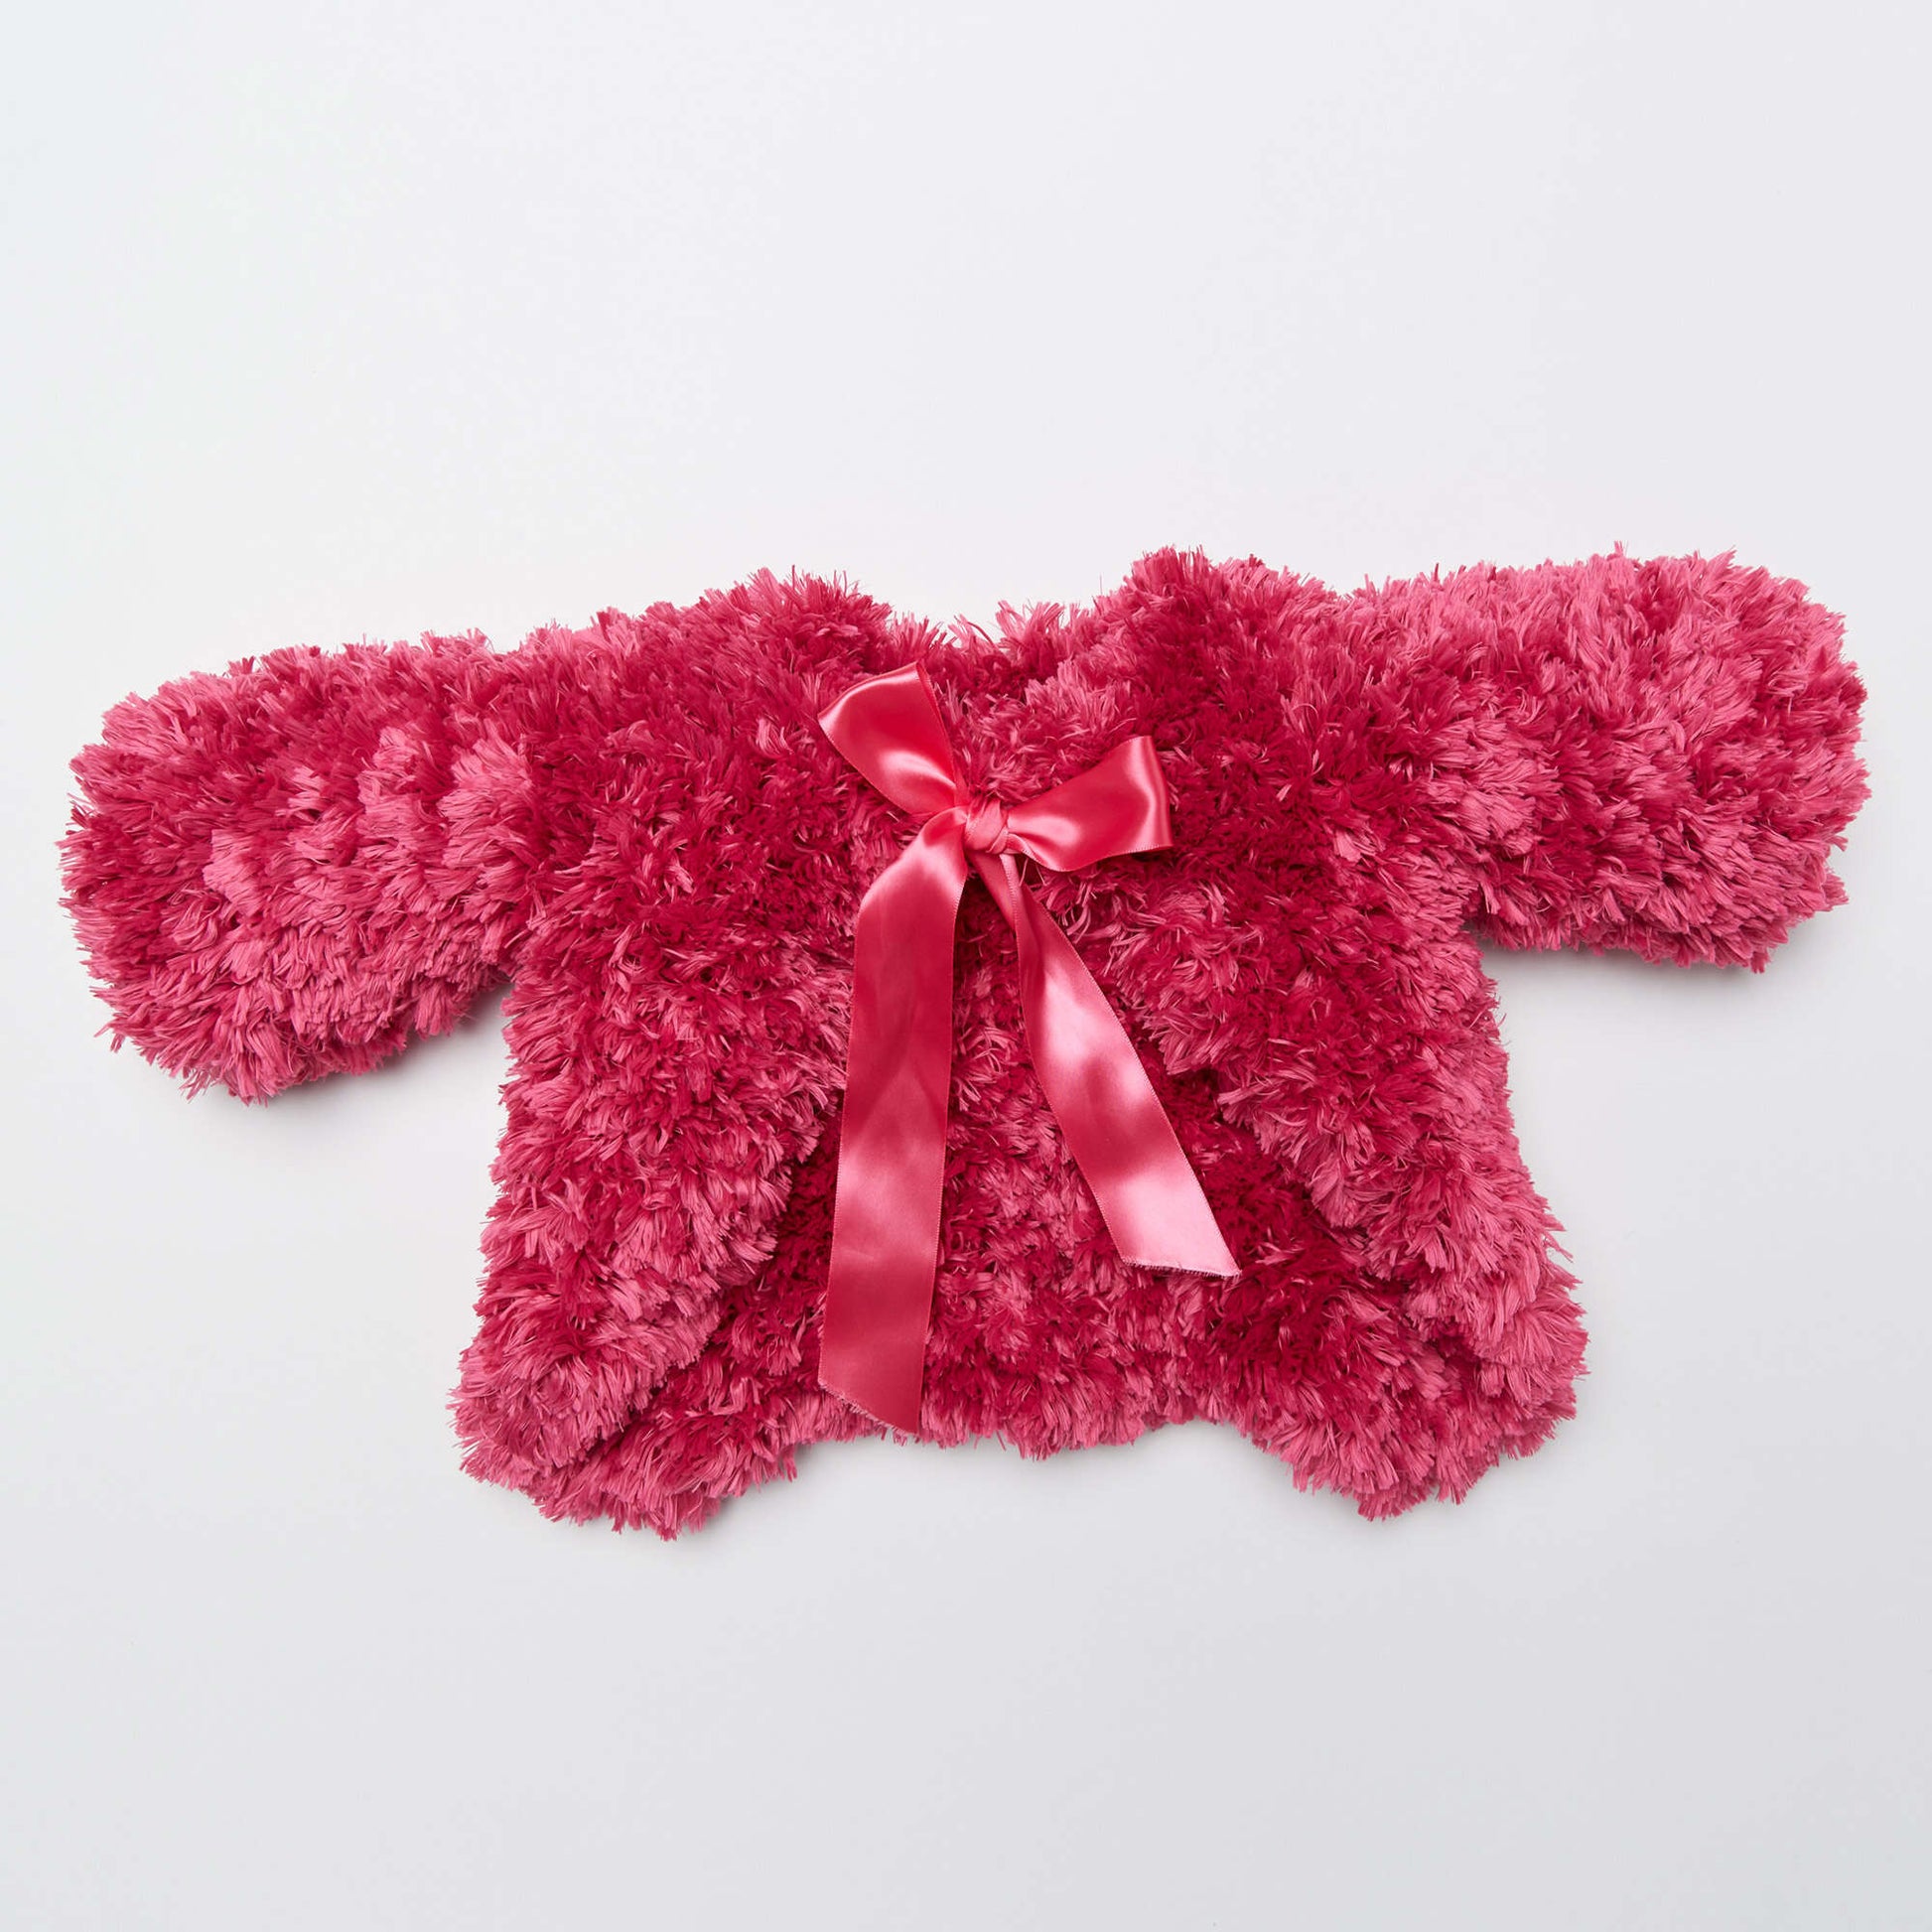 Free Red Heart Knit Girls' Fashion Fur Shrug Pattern